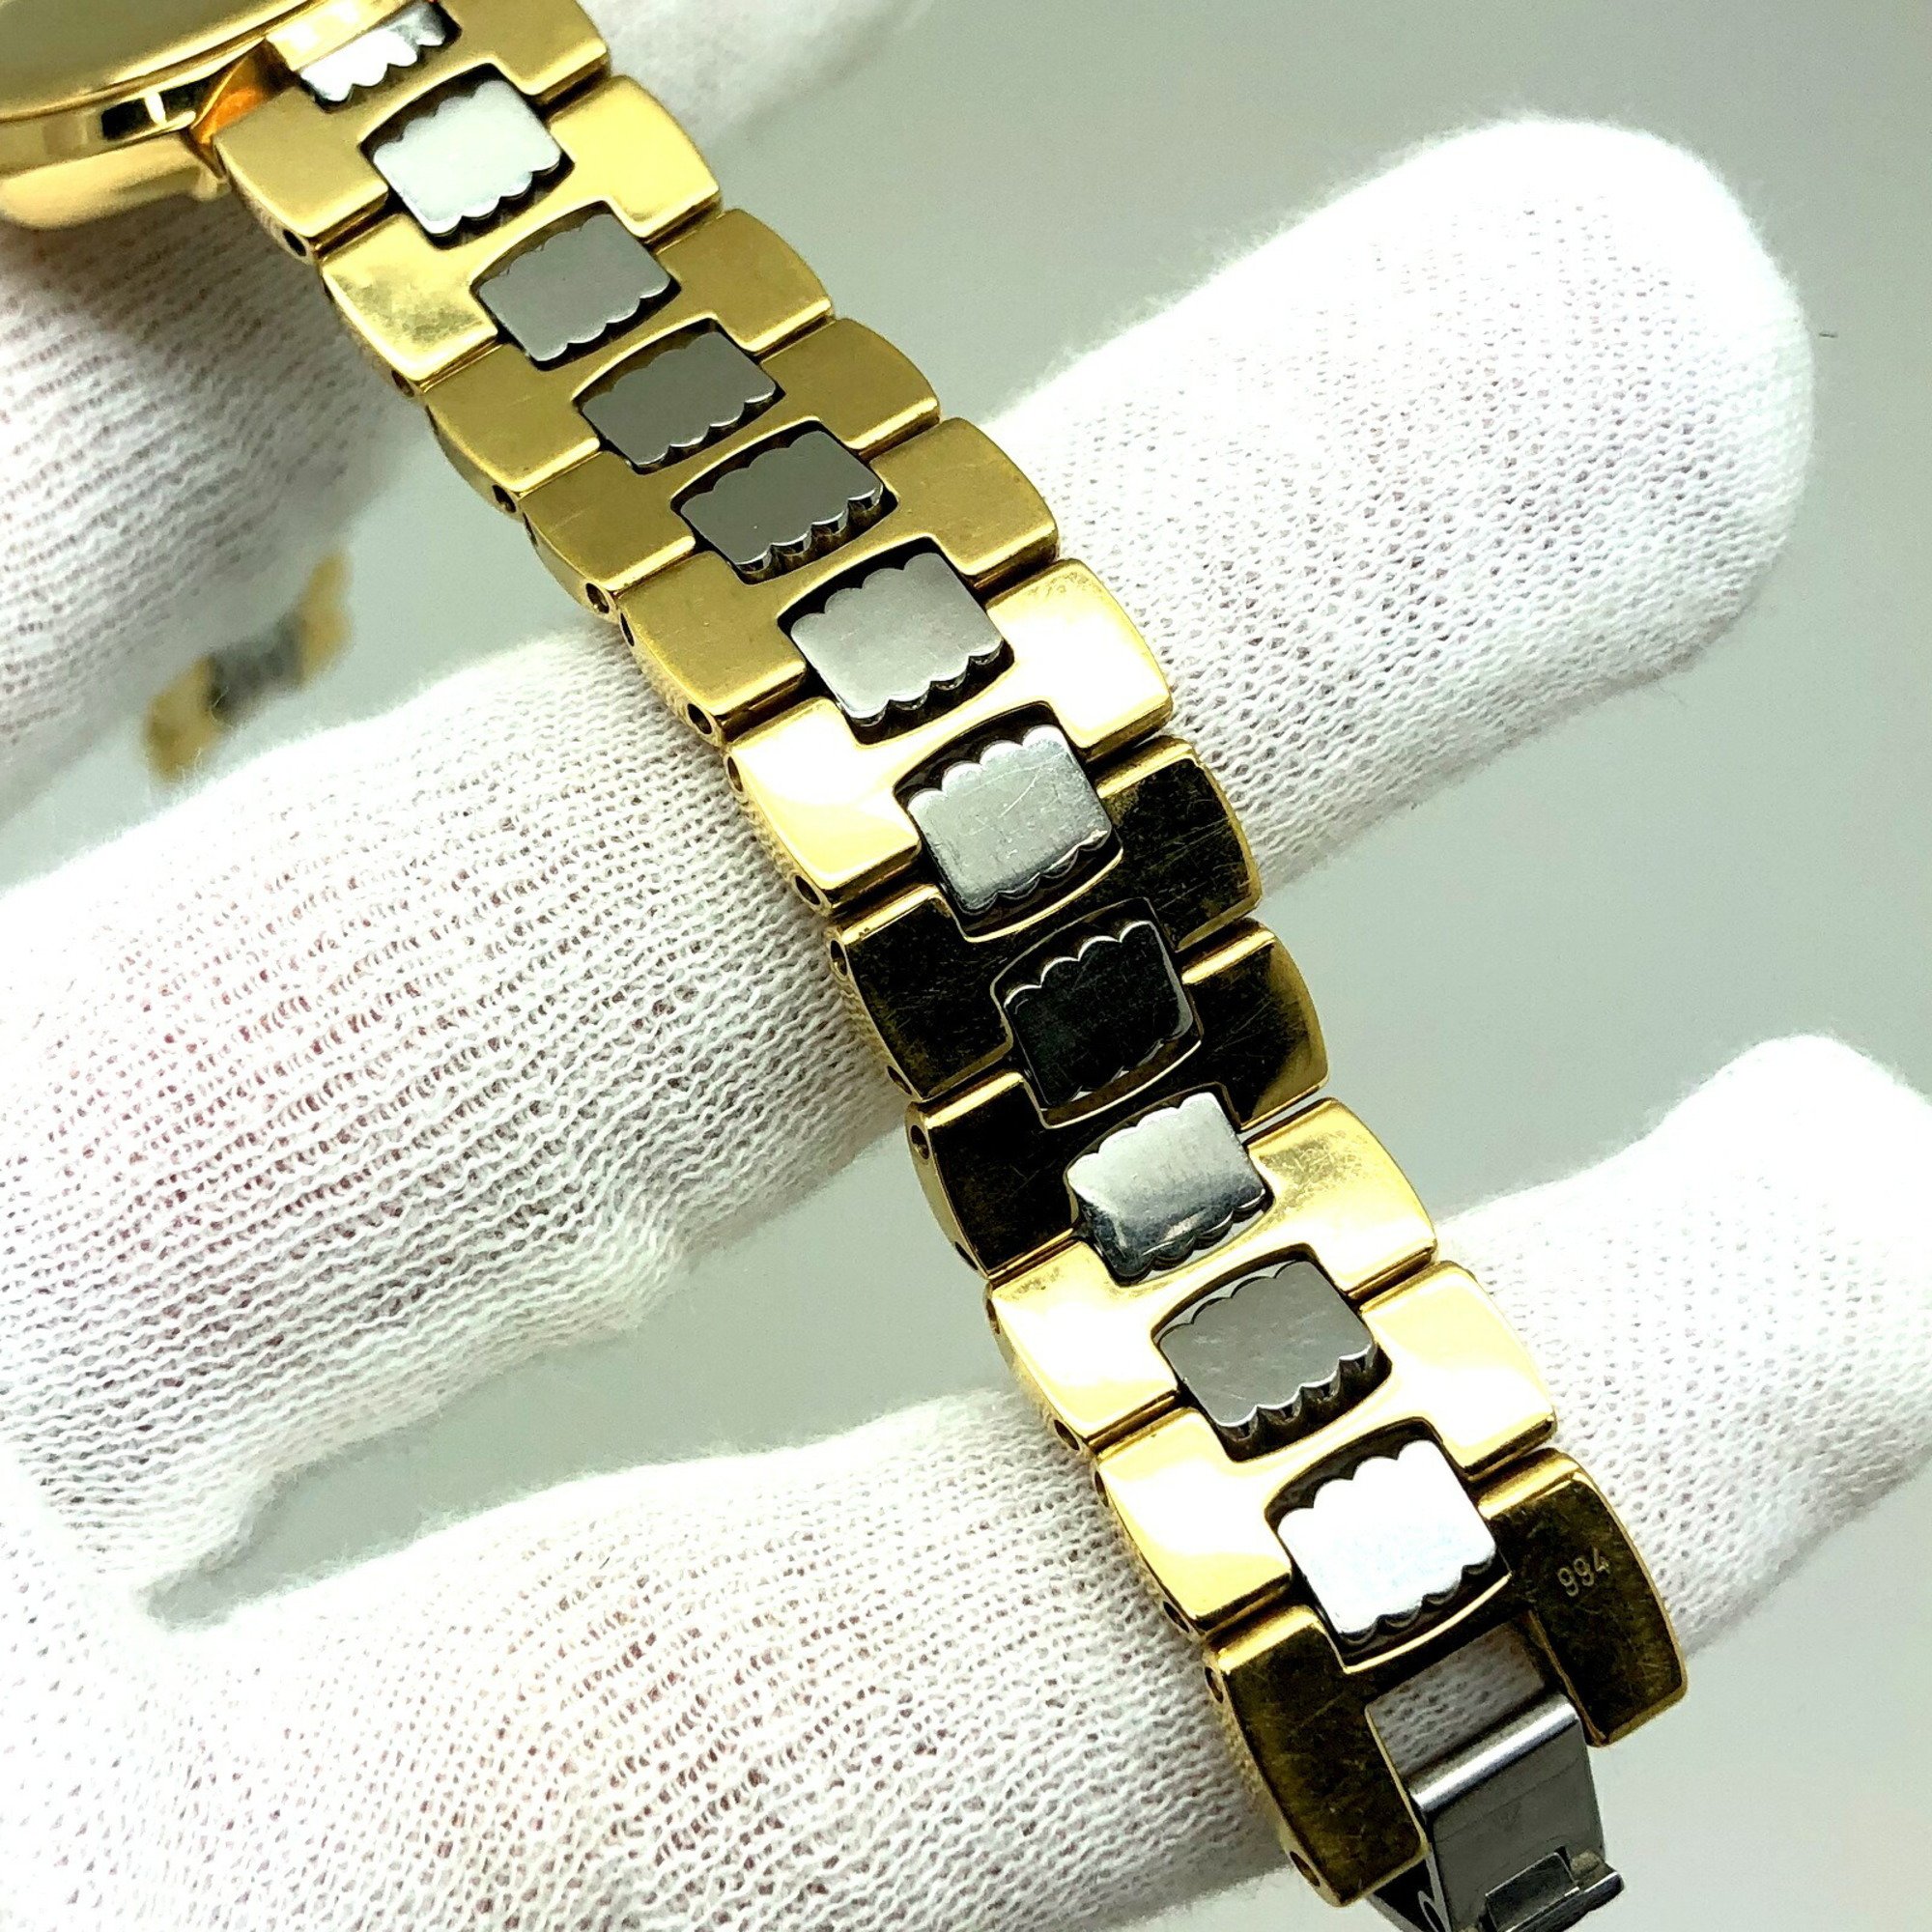 Christian Dior Quartz Watch D48.133 Silver Gold Dial Octagon Date Women's ITV4H9LQJN08 RM4991D